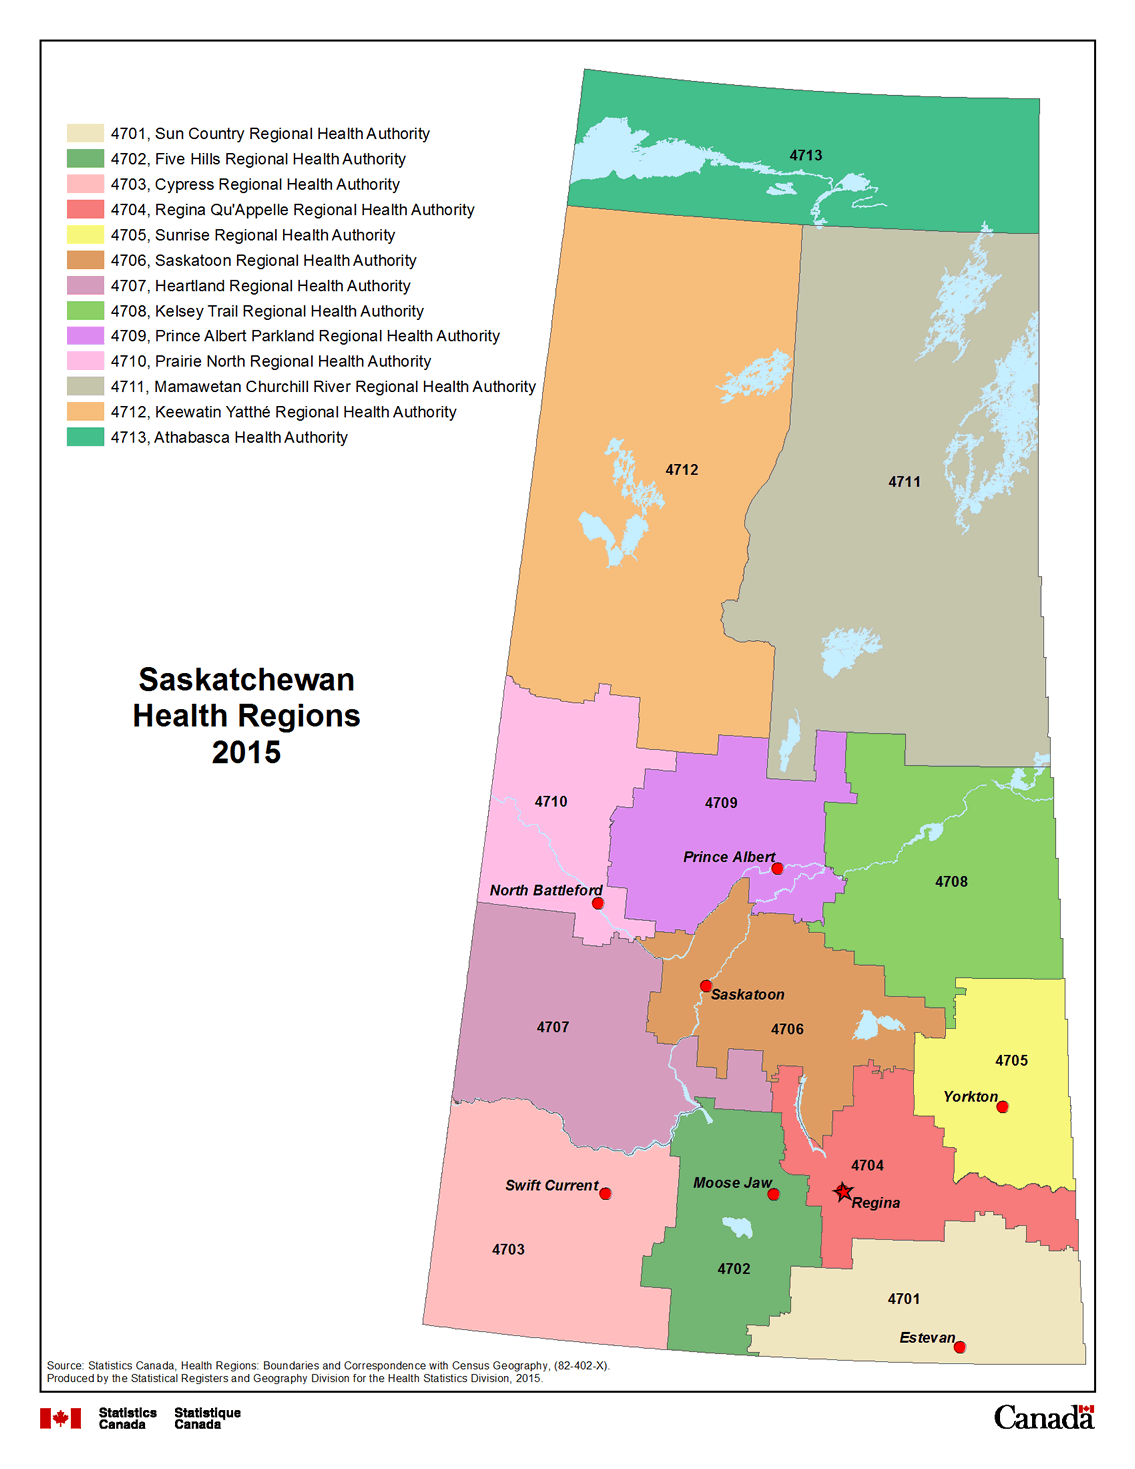 Map 10 Saskatchewan Health Regions, 2015